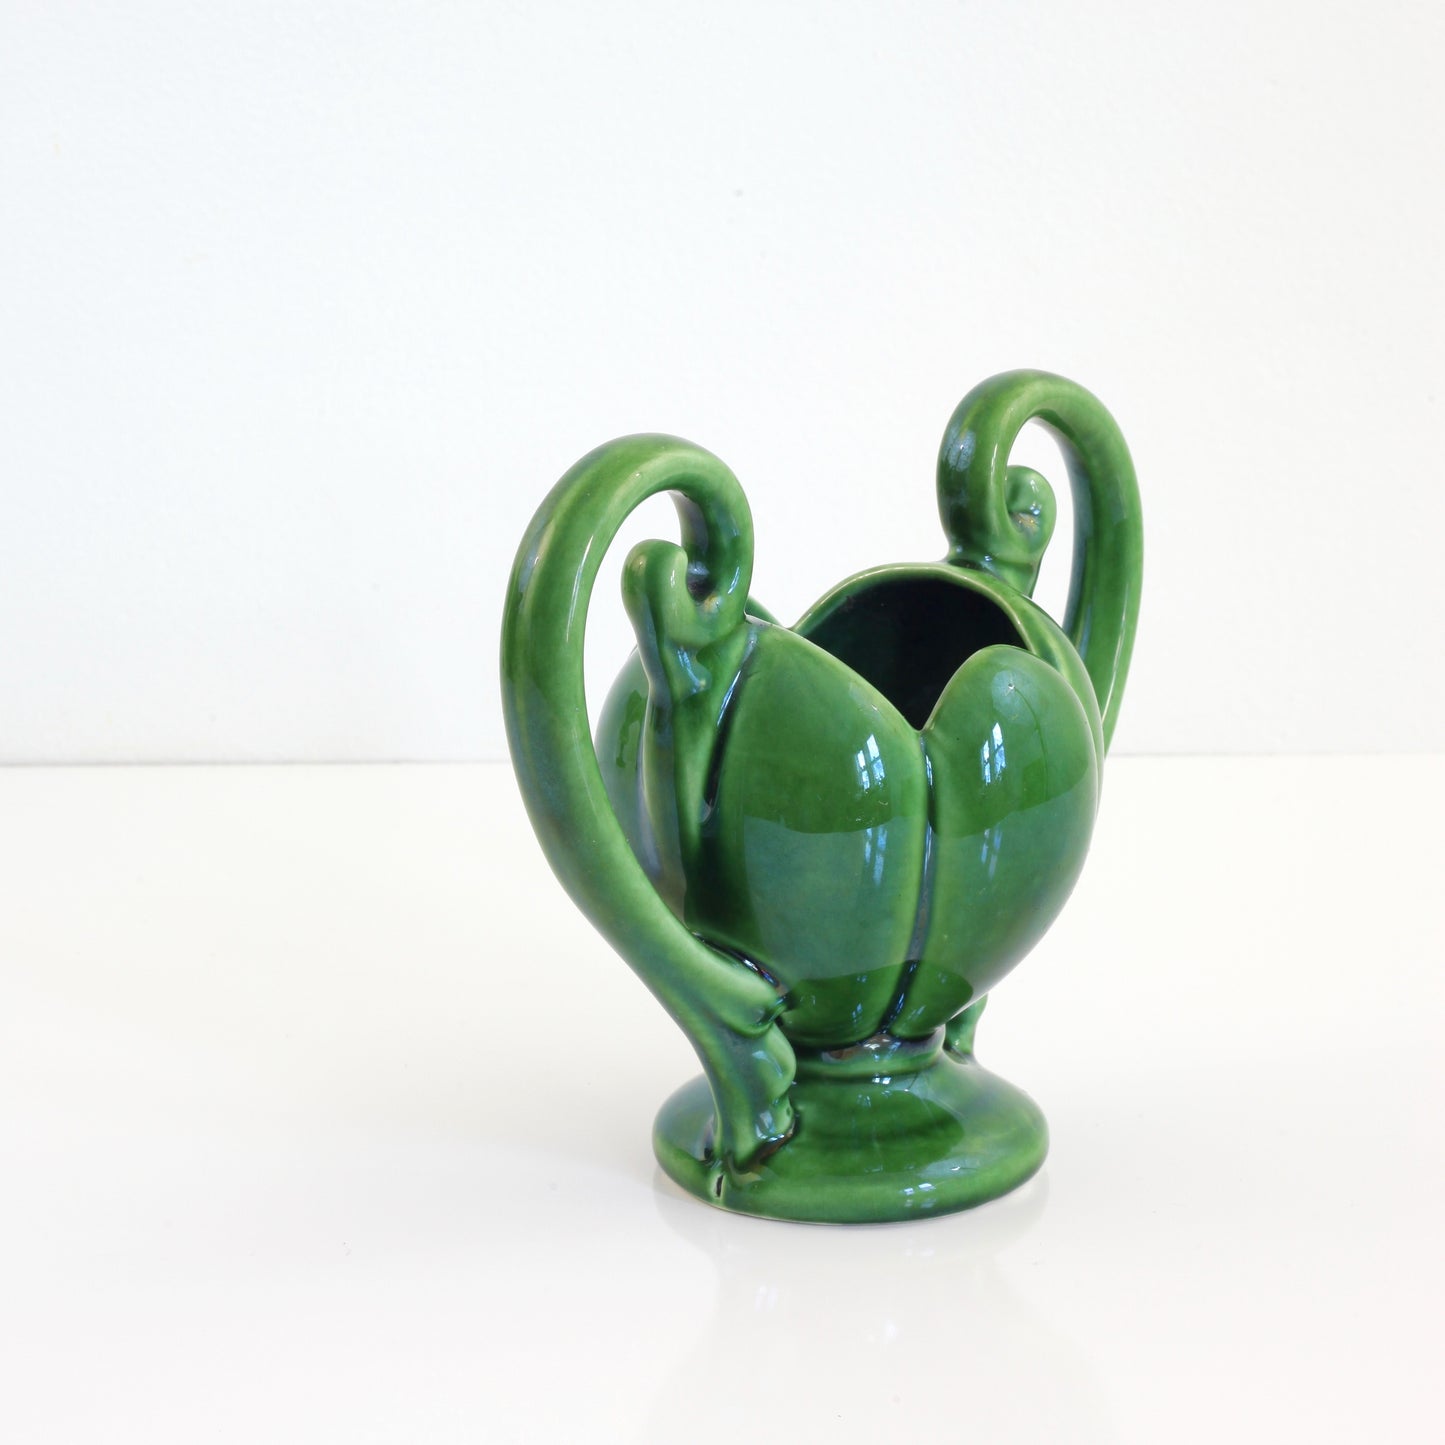 SOLD - Vintage 1930s Emerald Green Camark Double Handled Vase